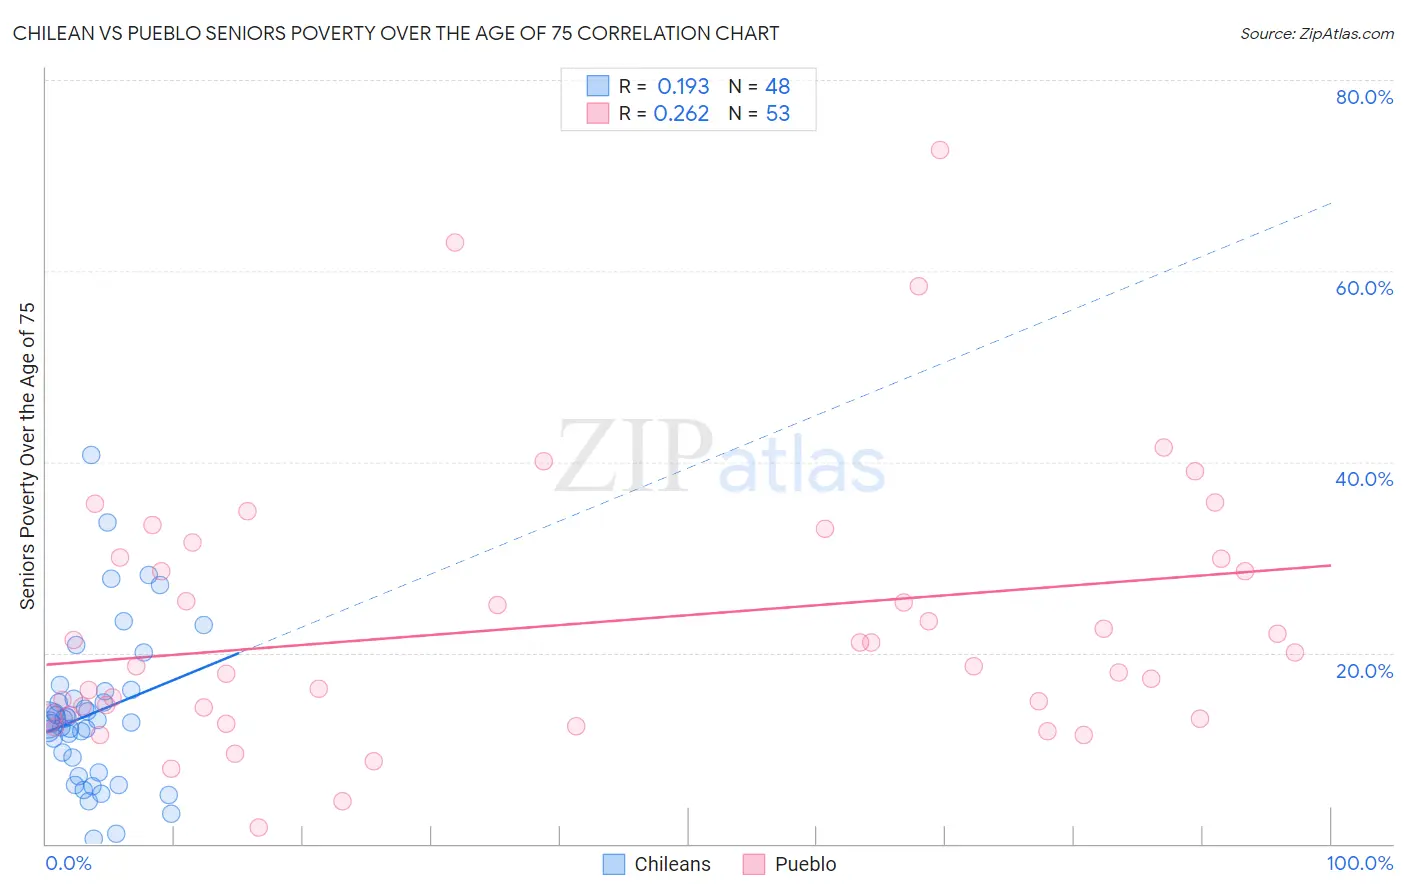 Chilean vs Pueblo Seniors Poverty Over the Age of 75